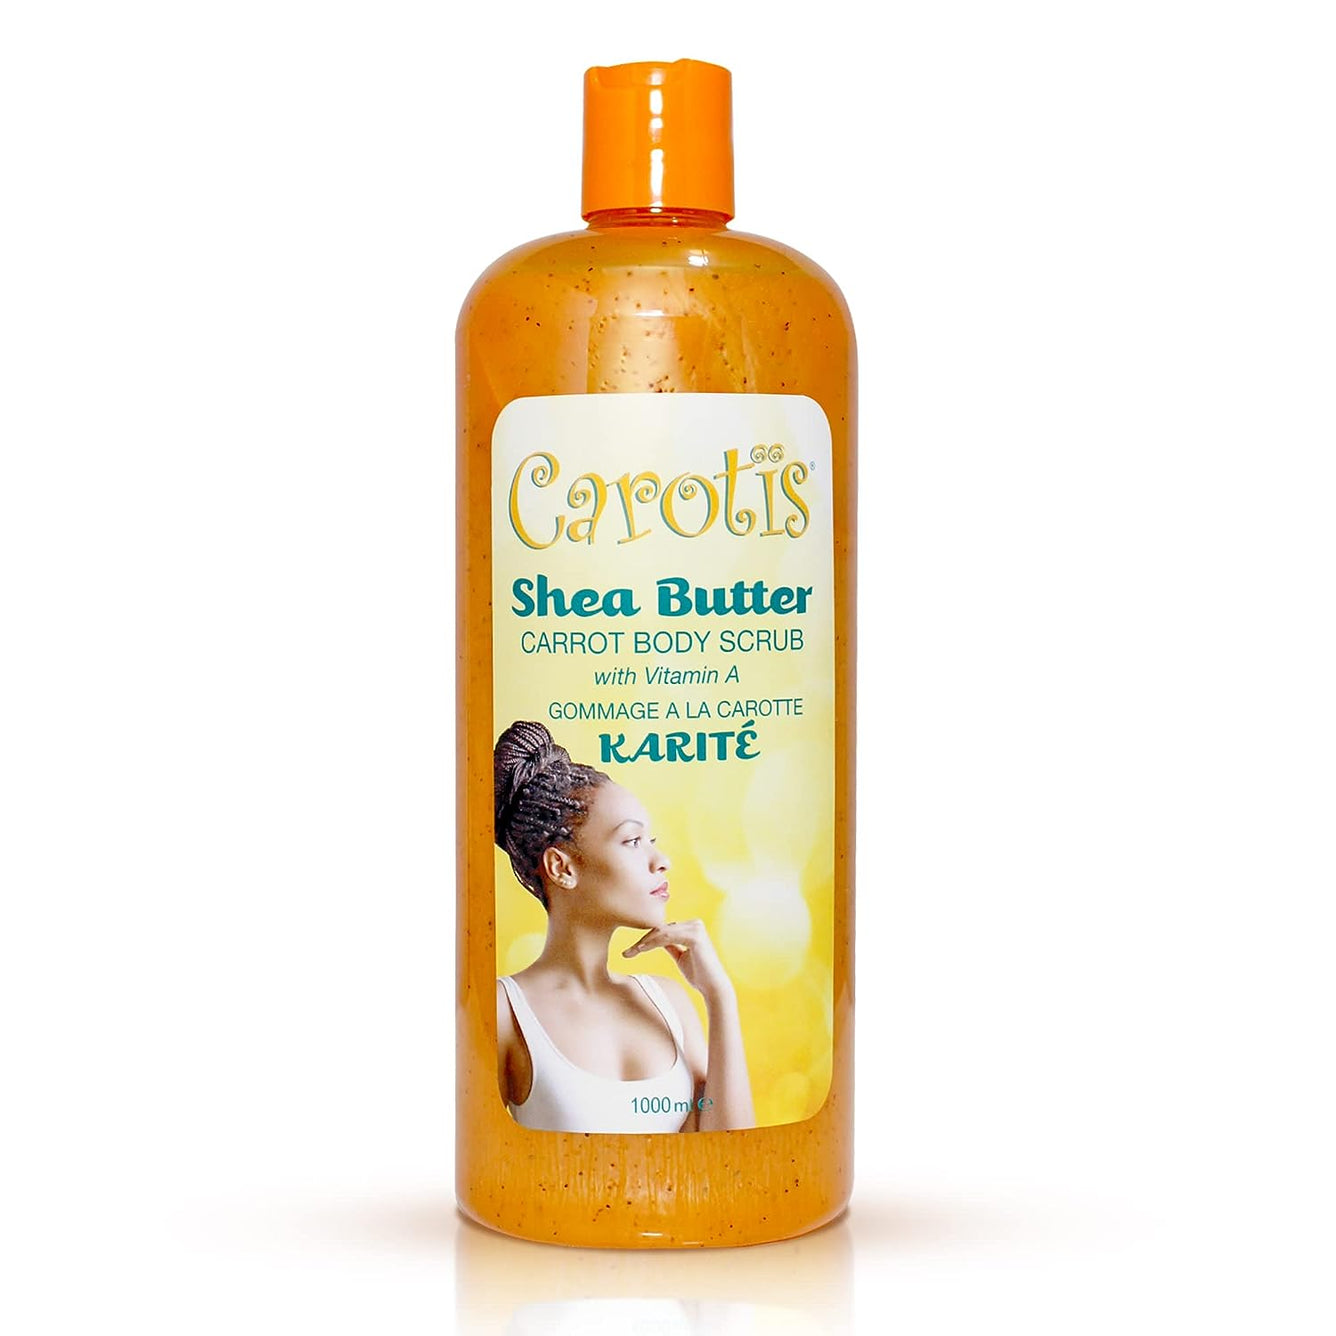 Carotis Shea Butter Body Scrub - With Vitamin A (Exfoliation) - 1000ml / 35 fl oz Carotis - Mitchell Brands - Skin Lightening, Skin Brightening, Fade Dark Spots, Shea Butter, Hair Growth Products